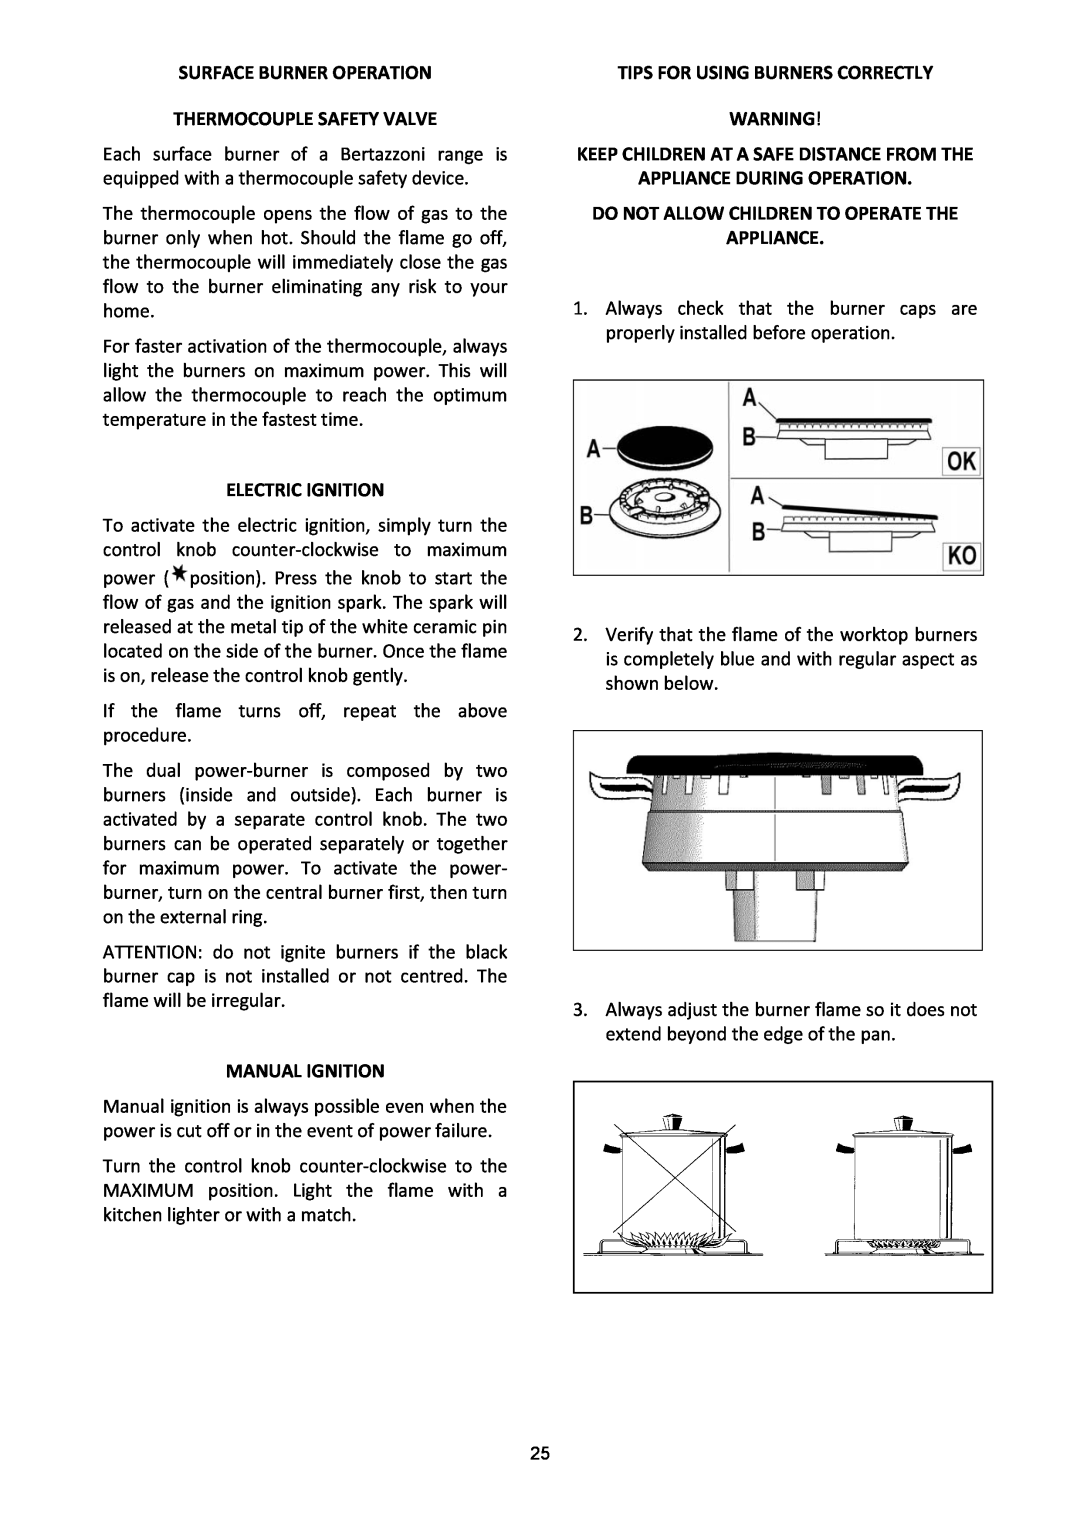 Bertazzoni X304PIRVI, X304PIRGI Surface Burner Operation Thermocouple Safety Valve, Electric Ignition, Manual Ignition 